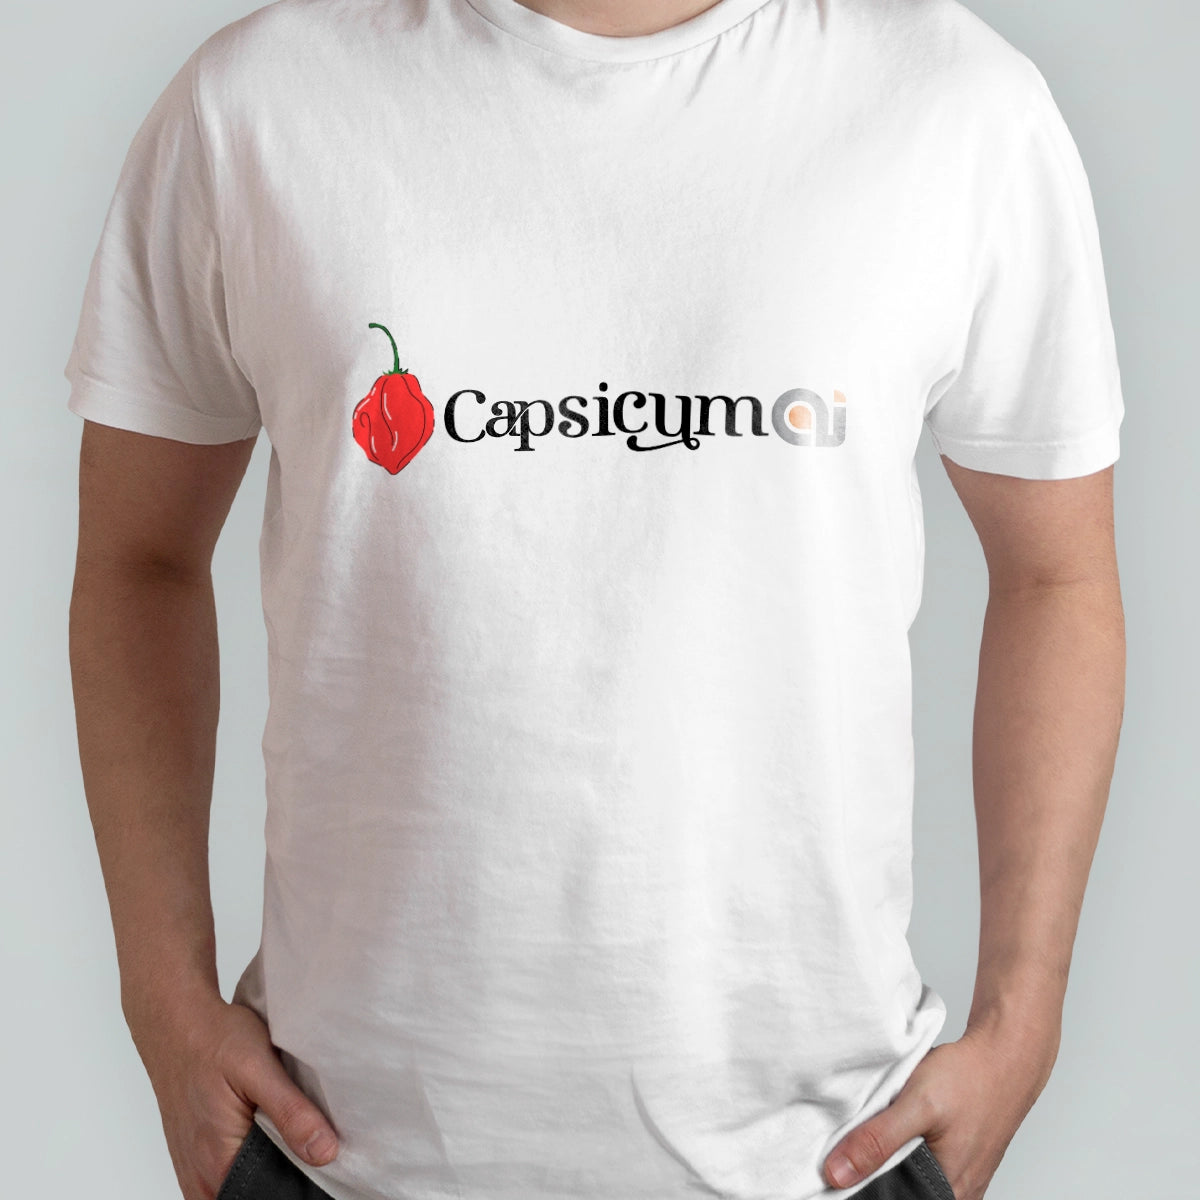 CapsicumAI.com